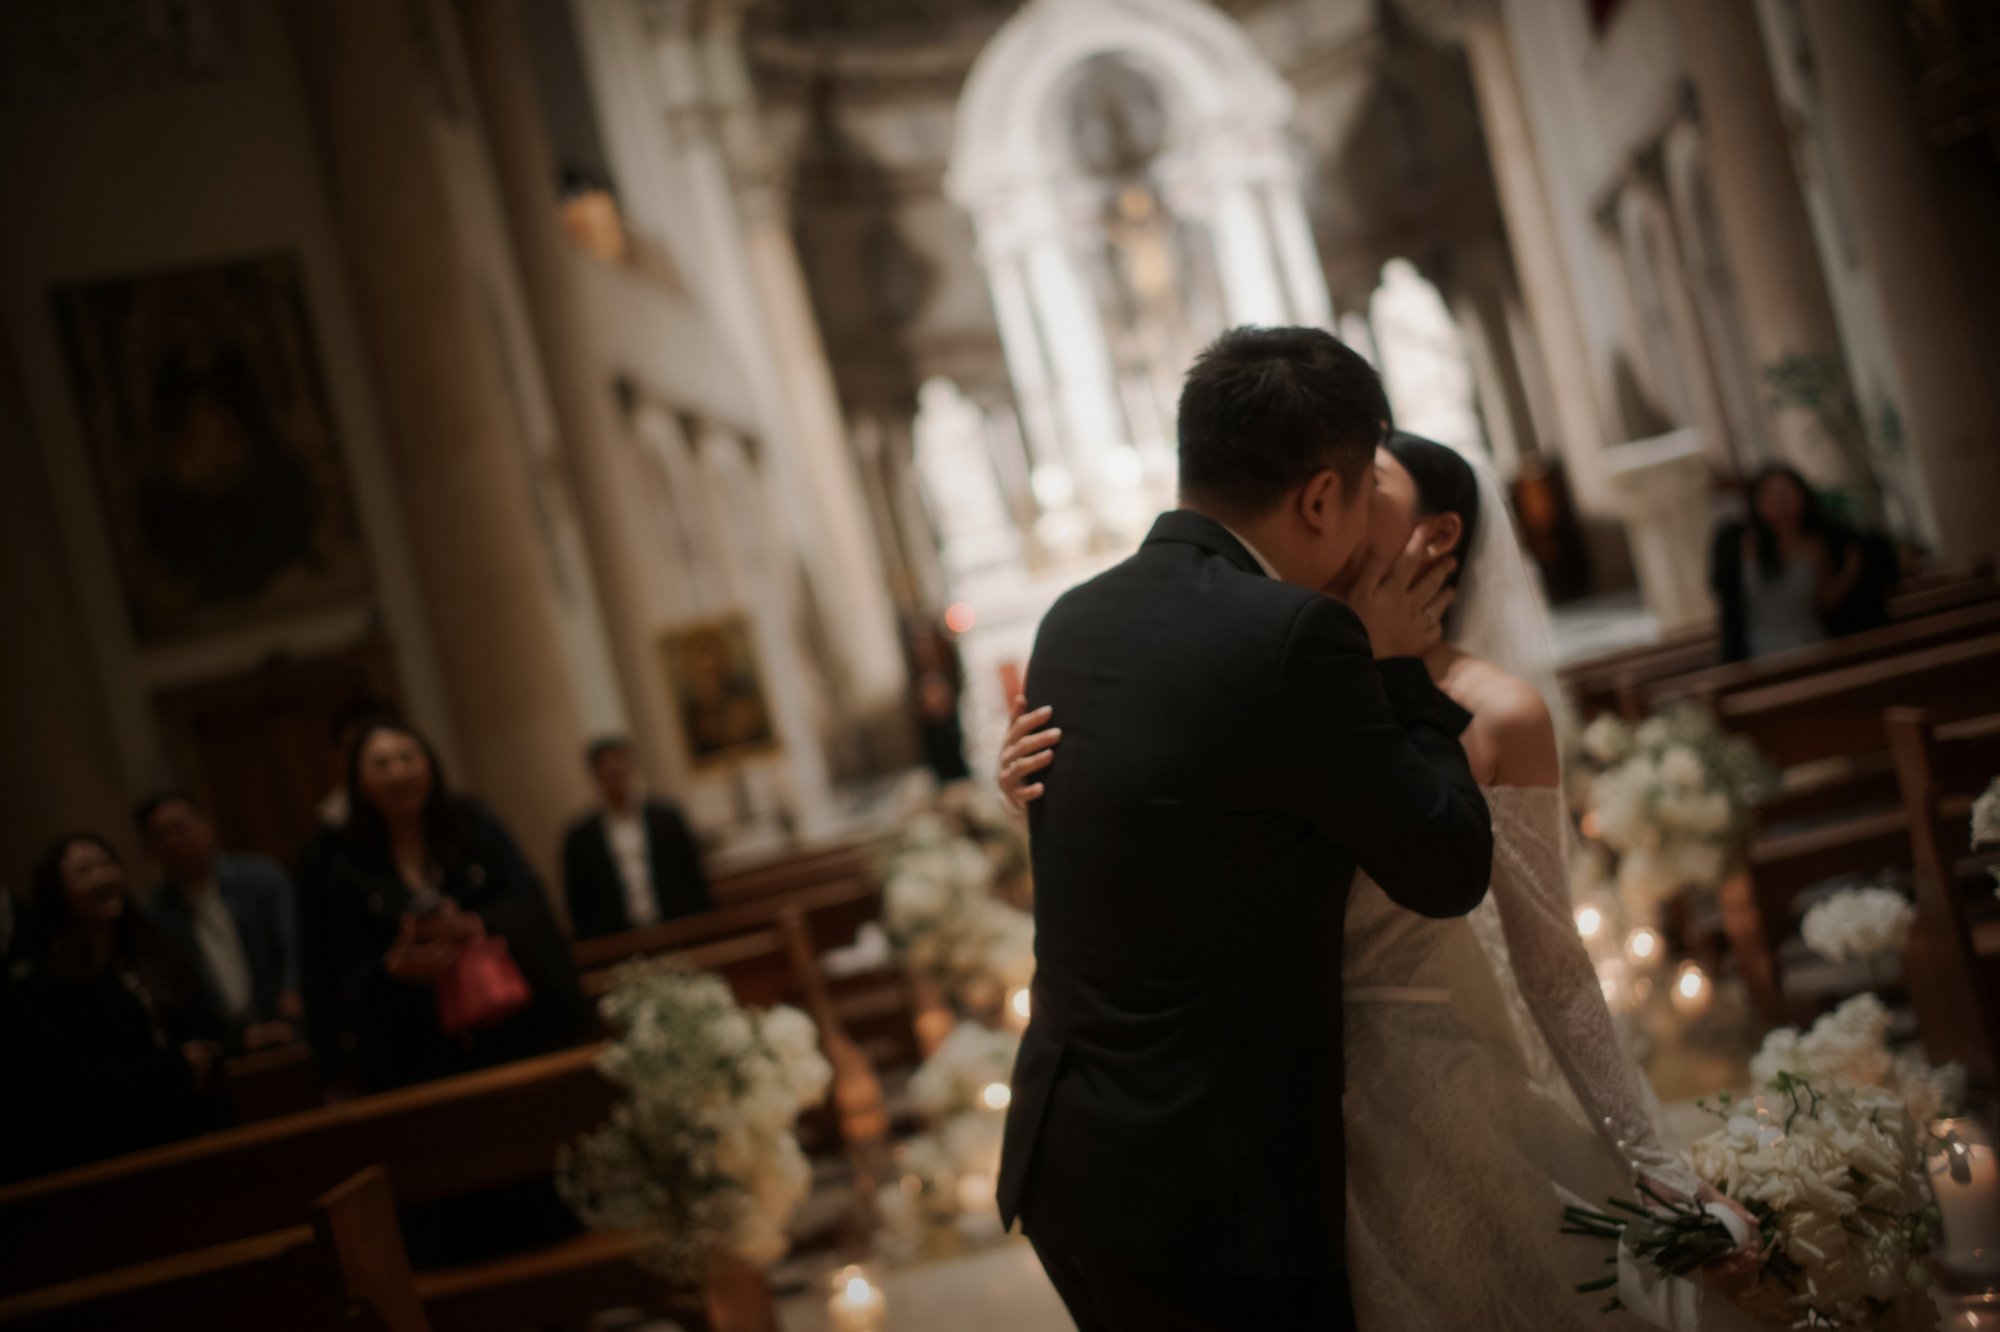 Prawira-Evelyn-Dolomites-Italy-Santre wedding-Yefta Gunawan-Jeriko MUA-Carol Kuntjoro Photography-64.jpg